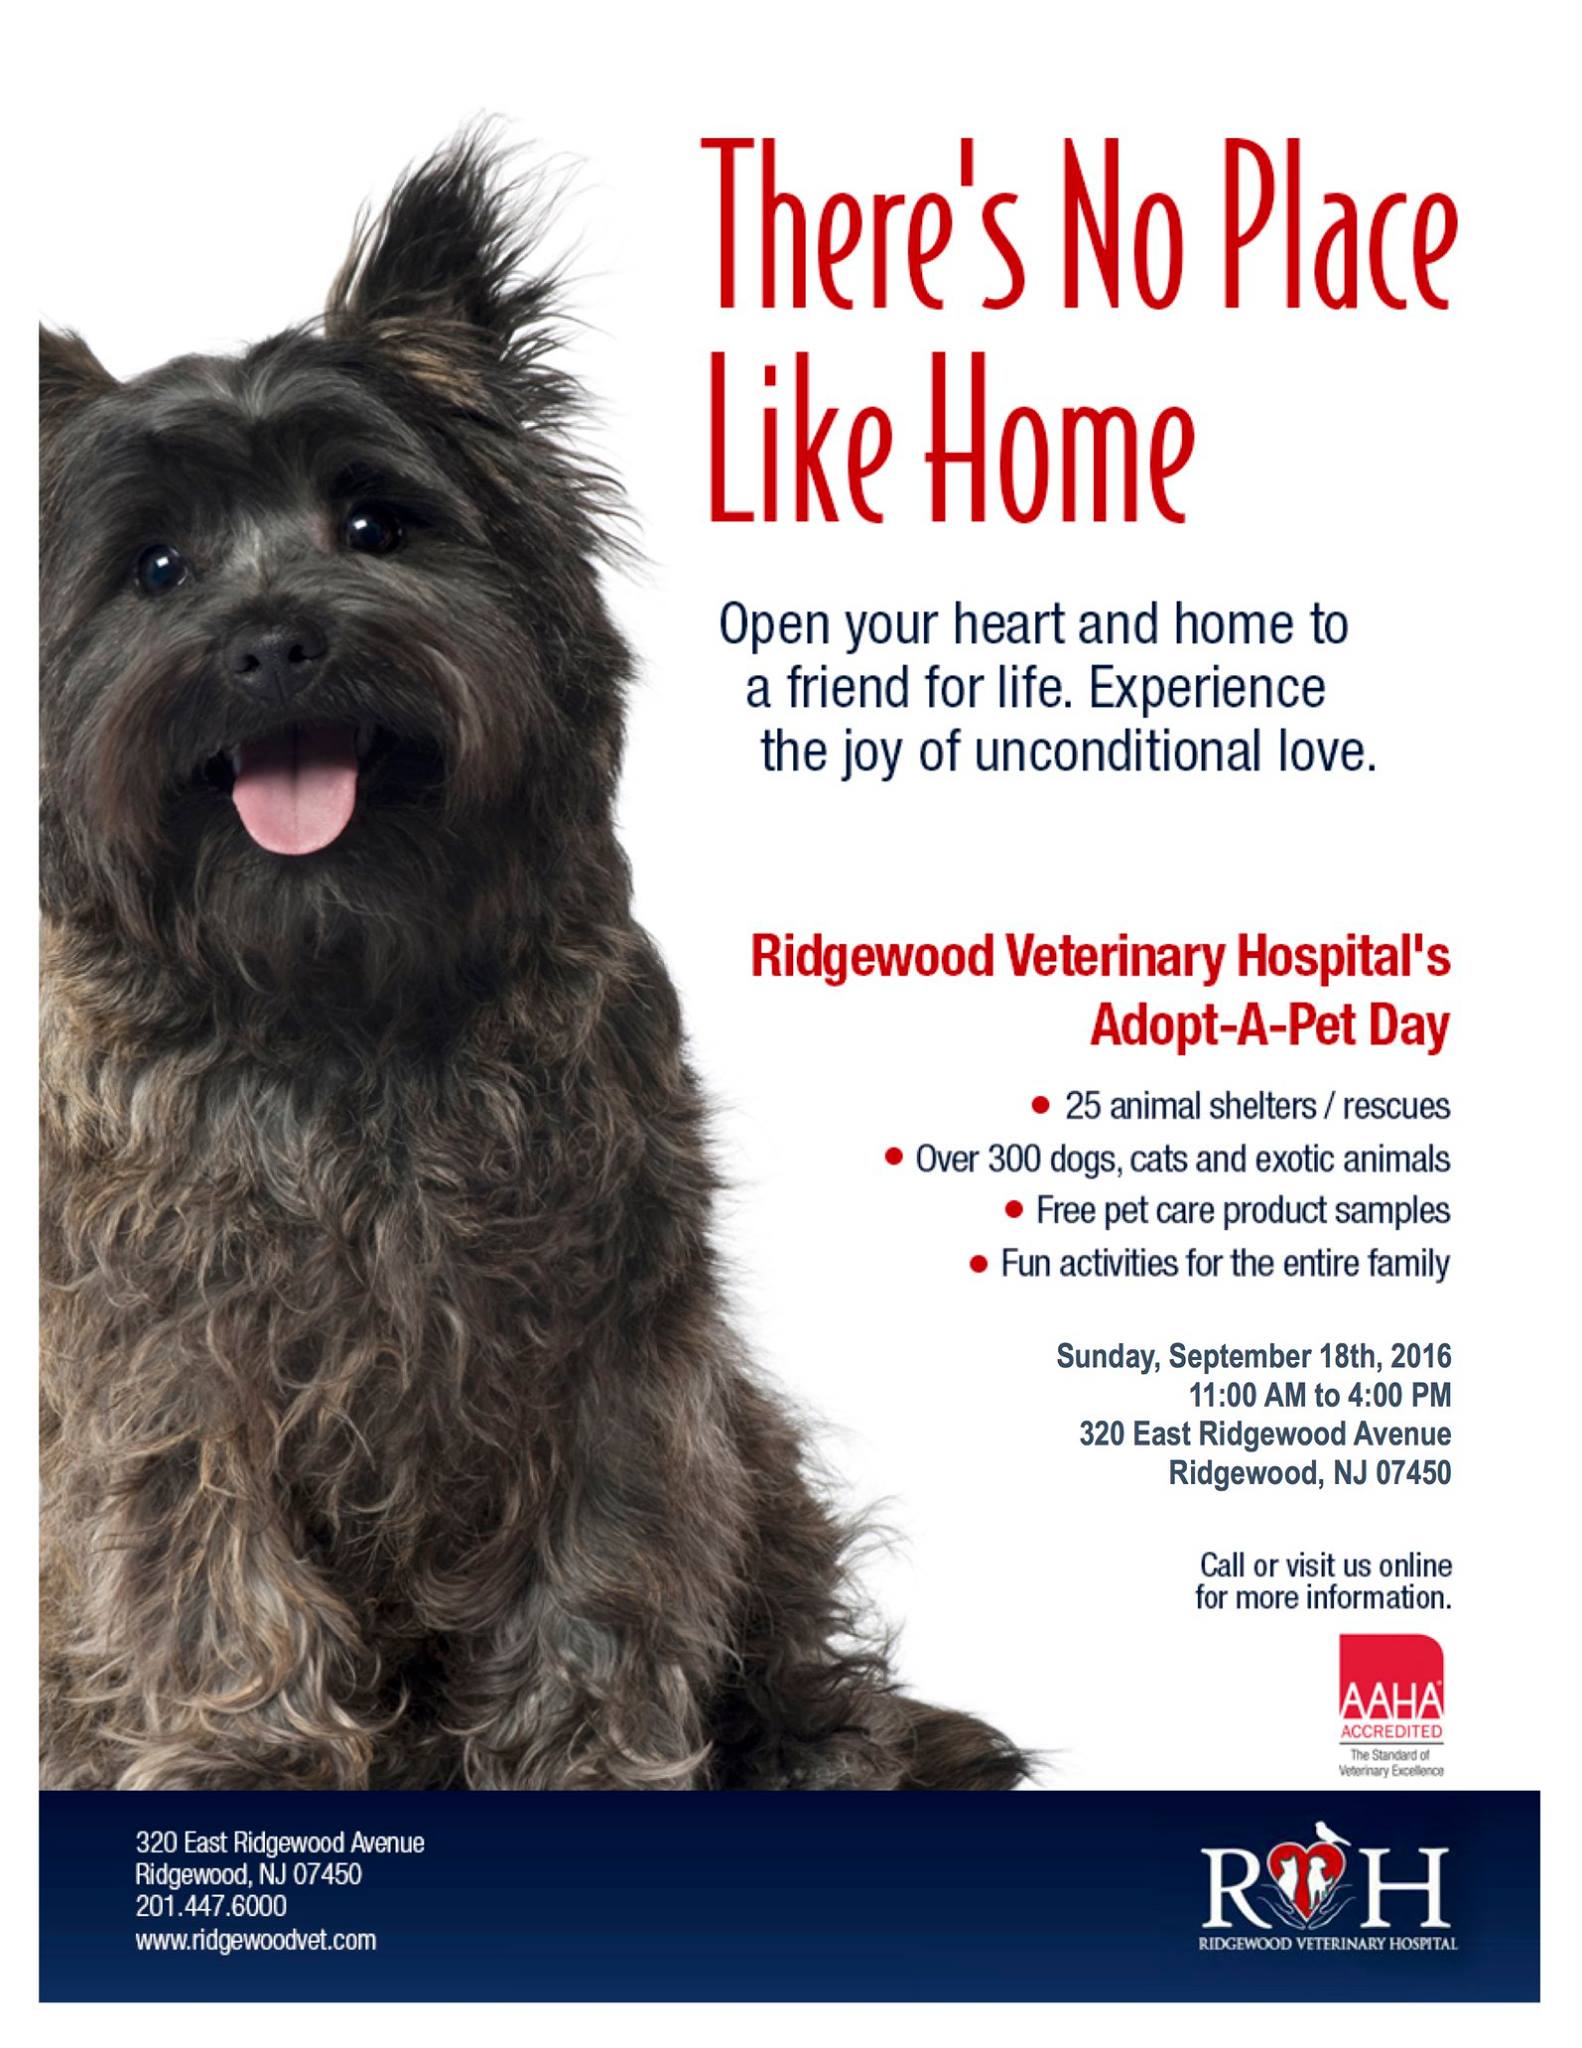 Ridgewood Veterinary Hospital Adopt-A-Pet Day